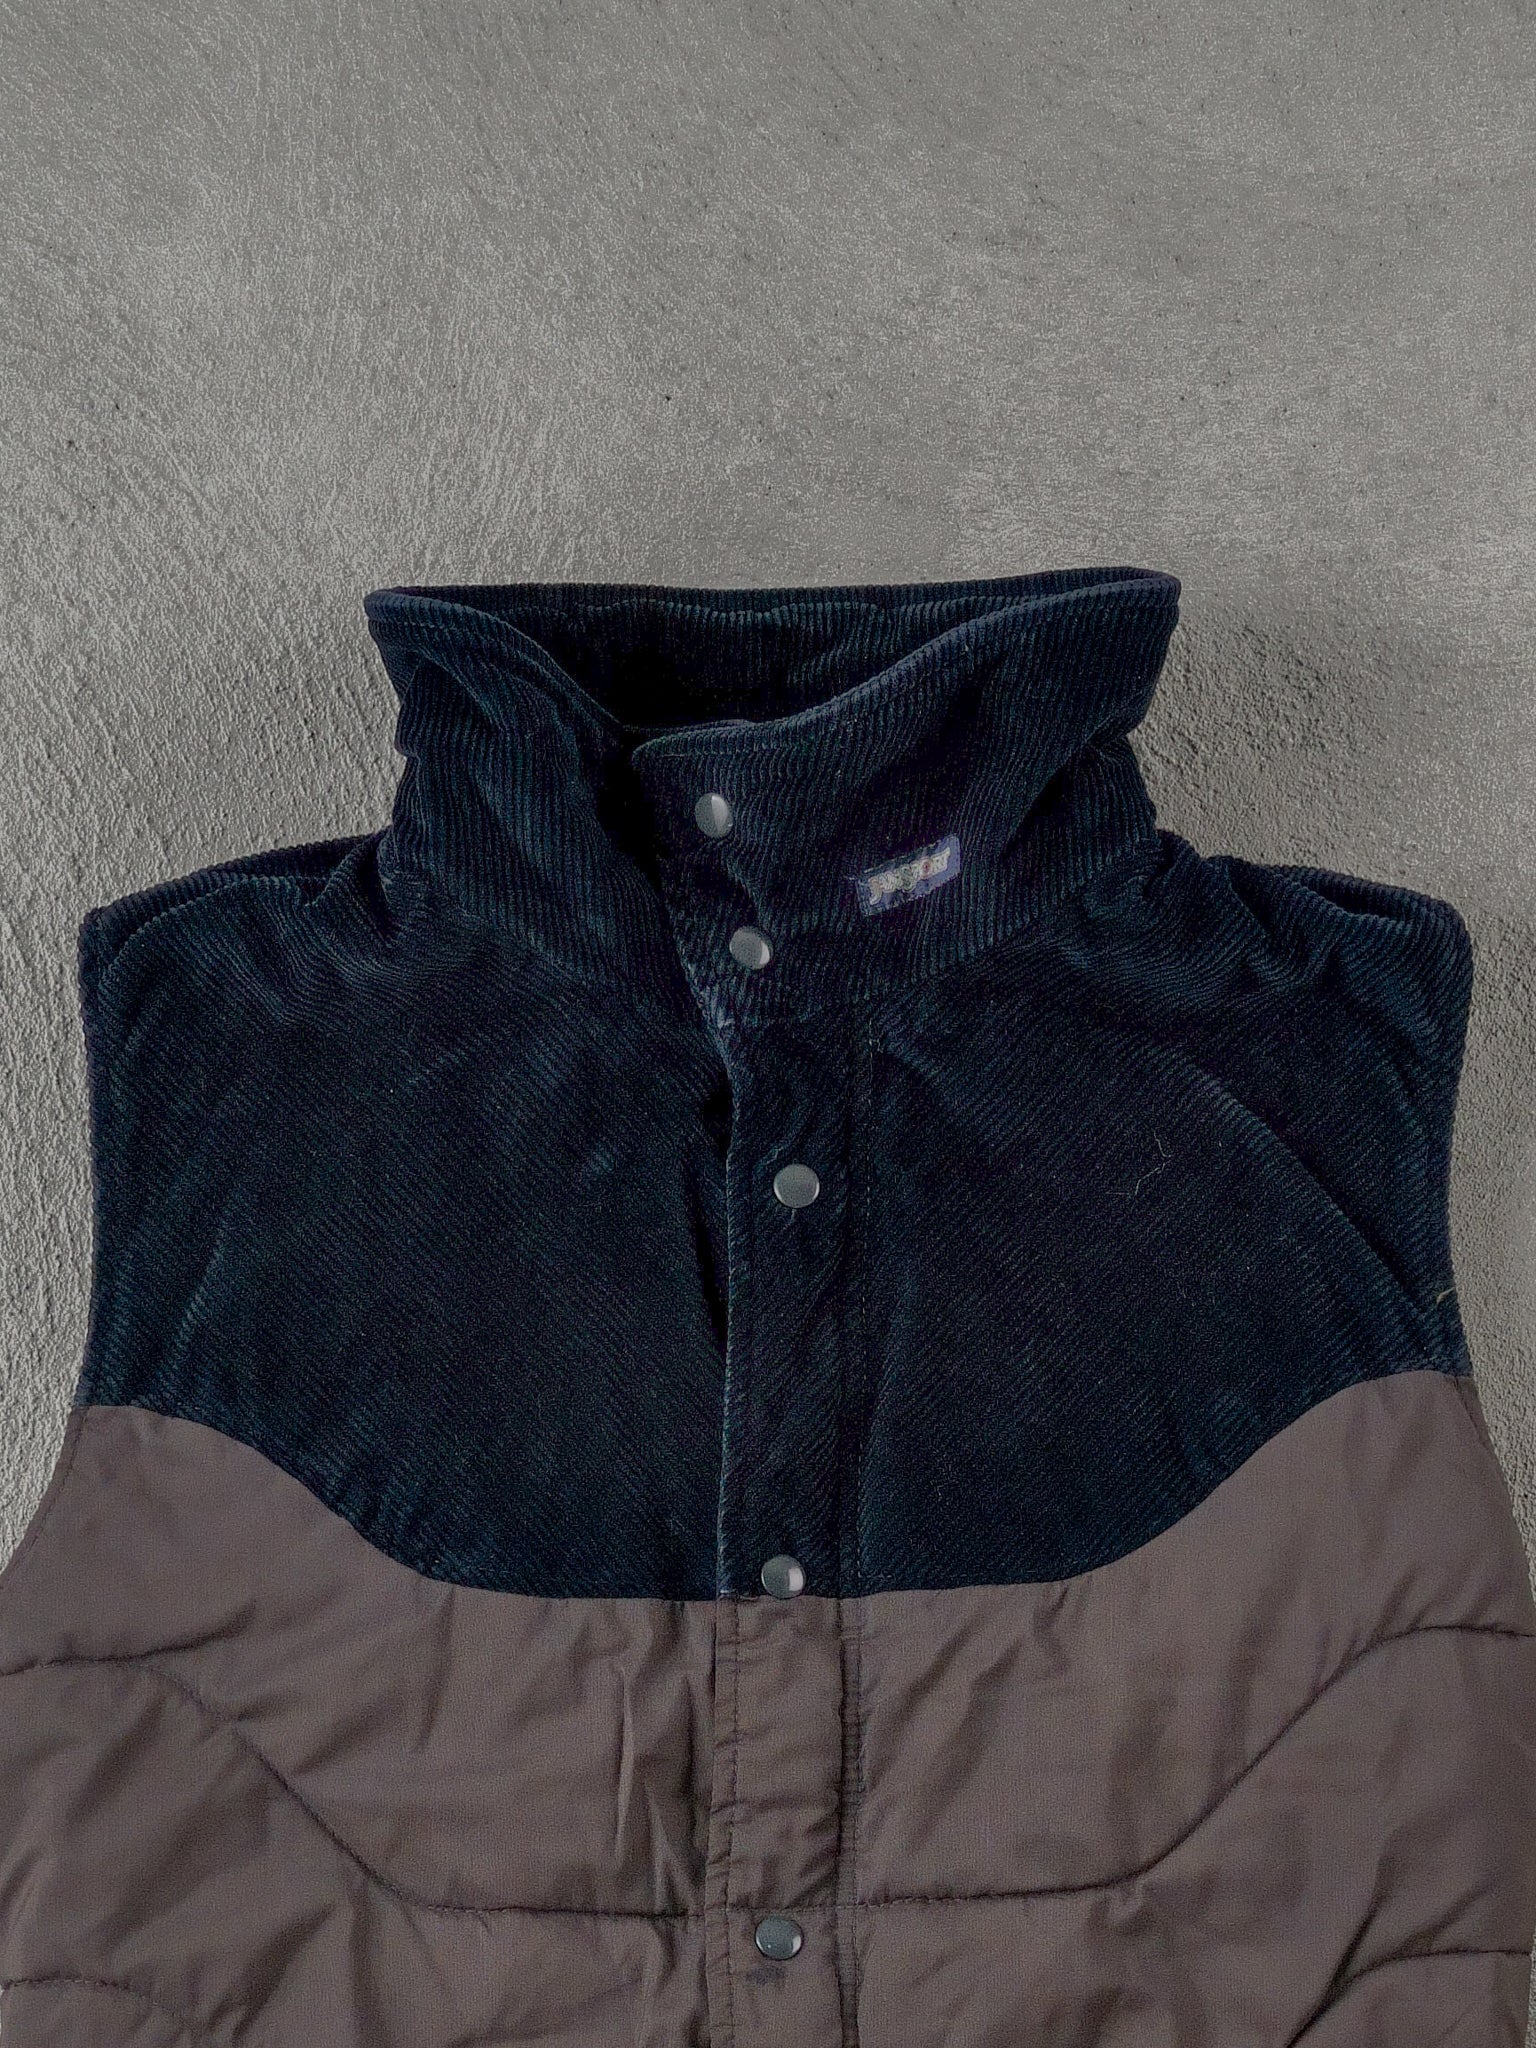 Vintage 90s Navy Blue and Grey Jansport Corduroy Vest (M)